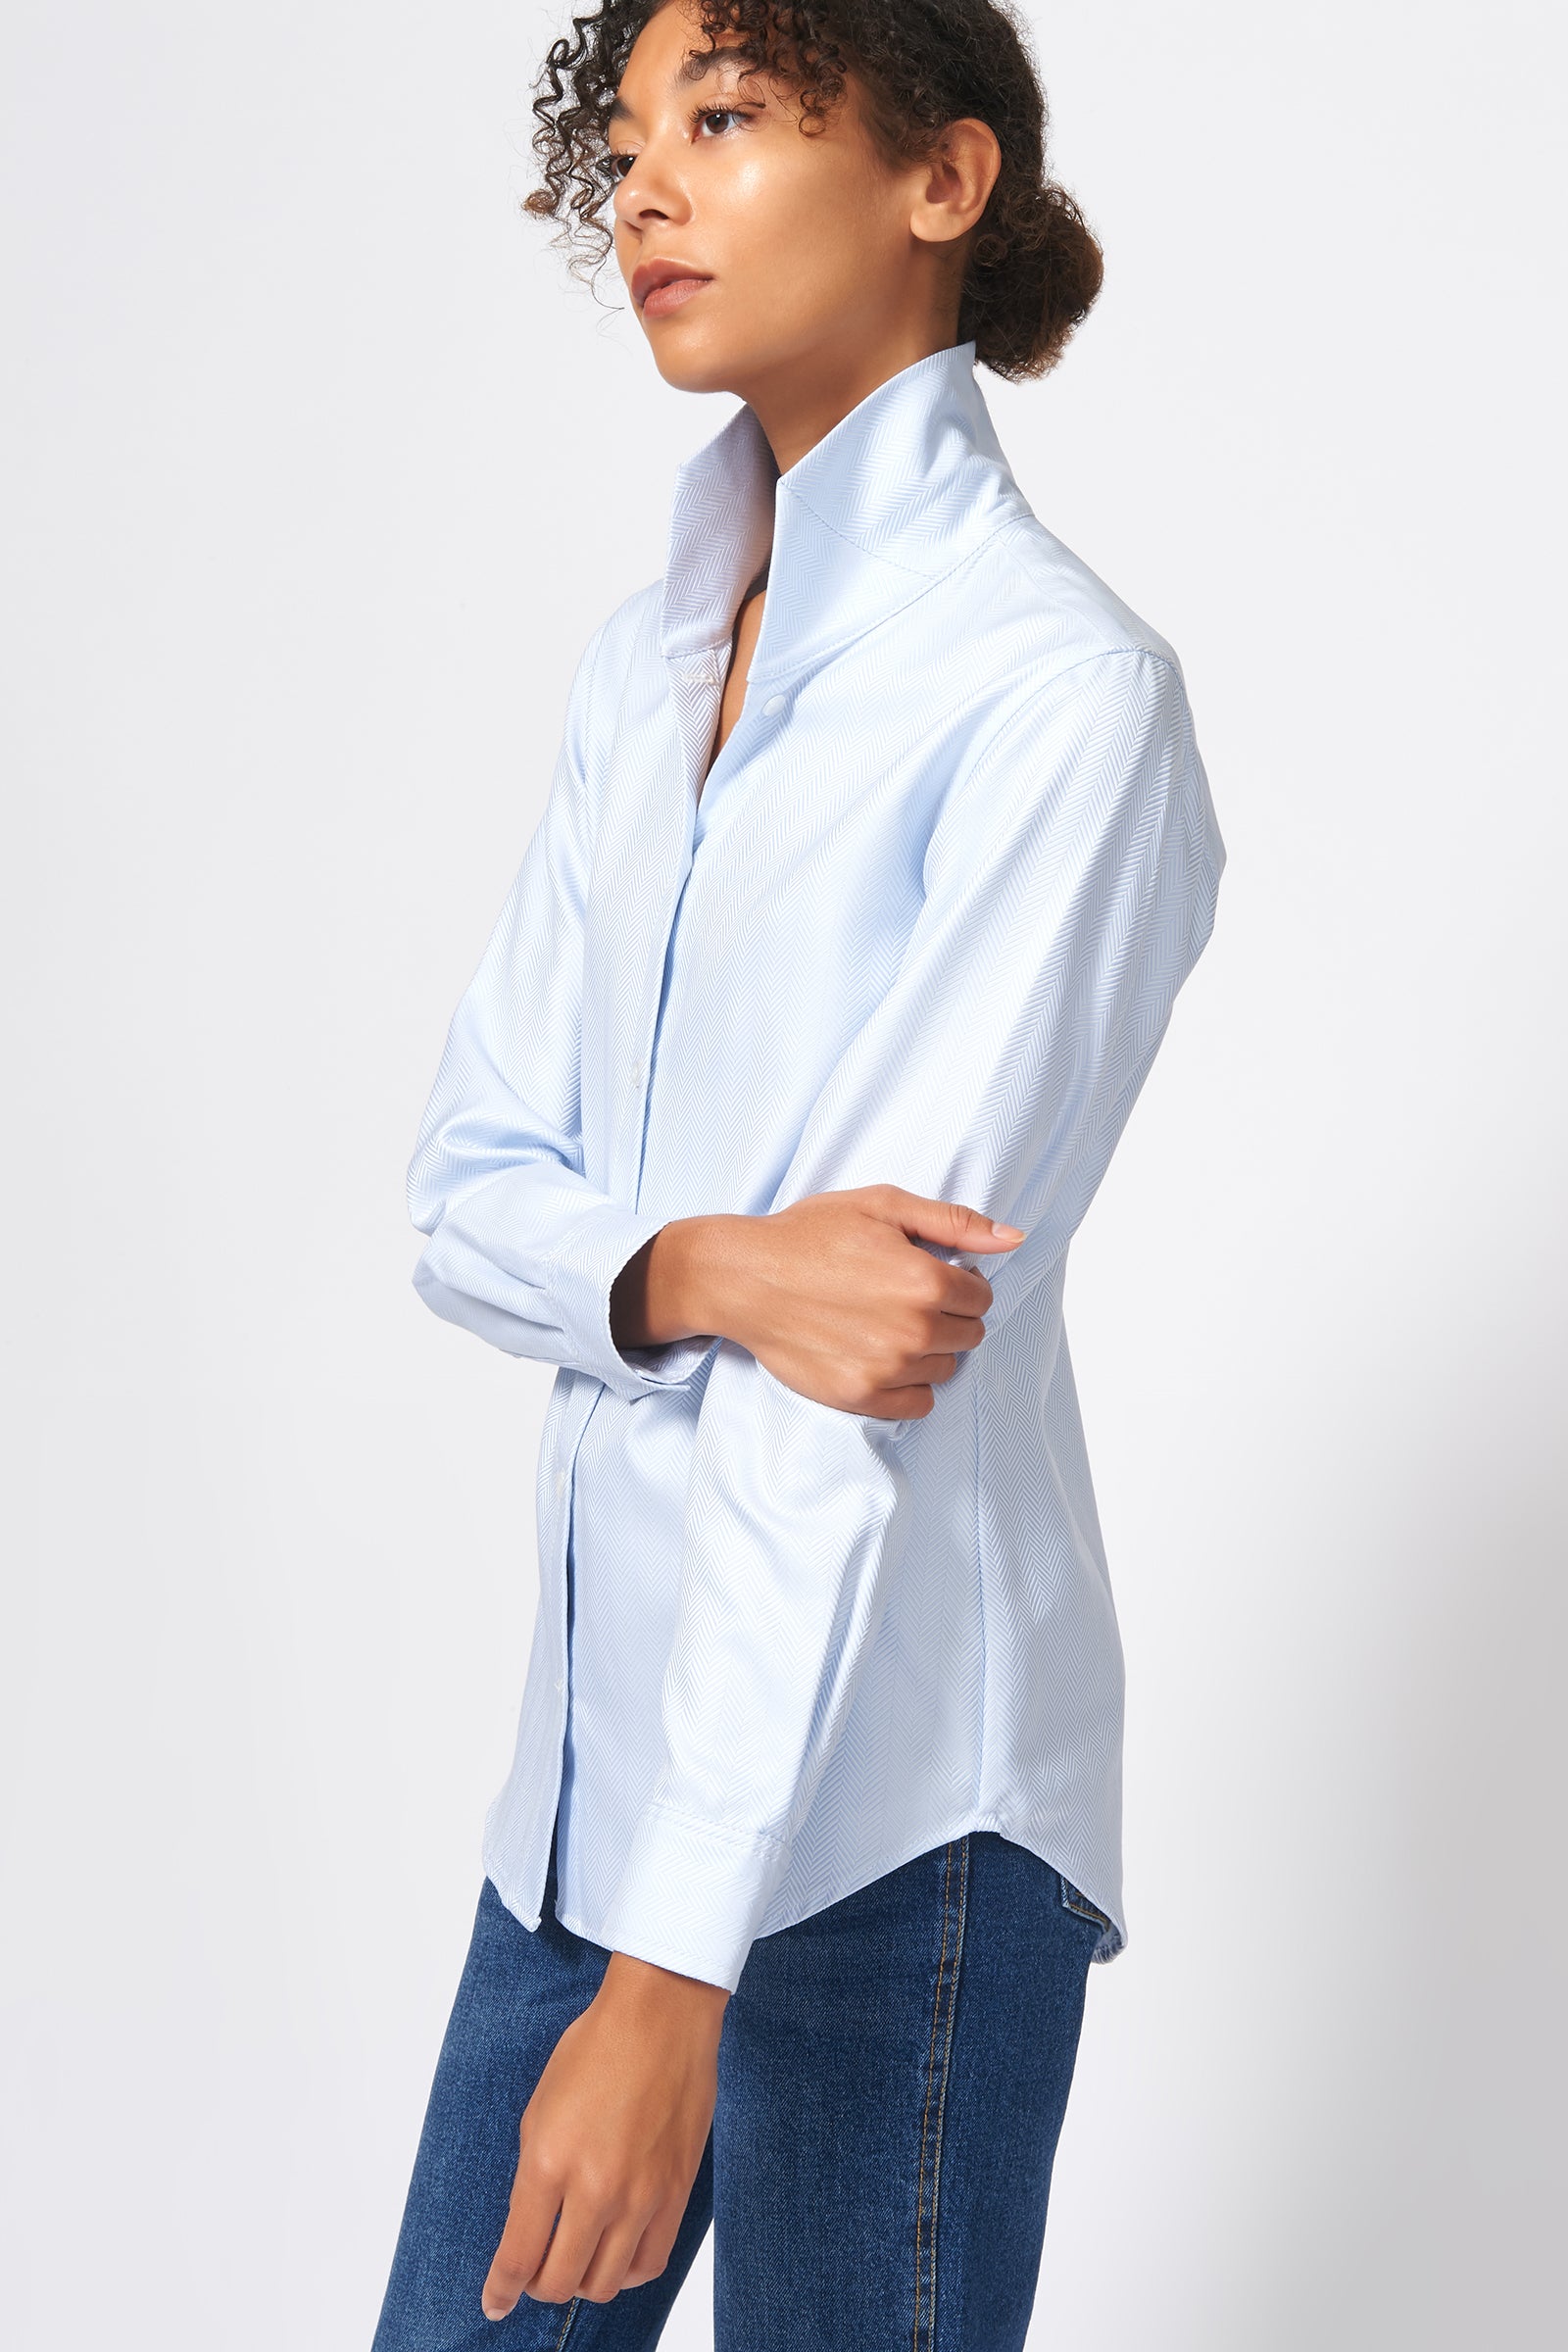 Kal Rieman Ginna Tailored Shirt in French Blue Herringbone on Model Side View